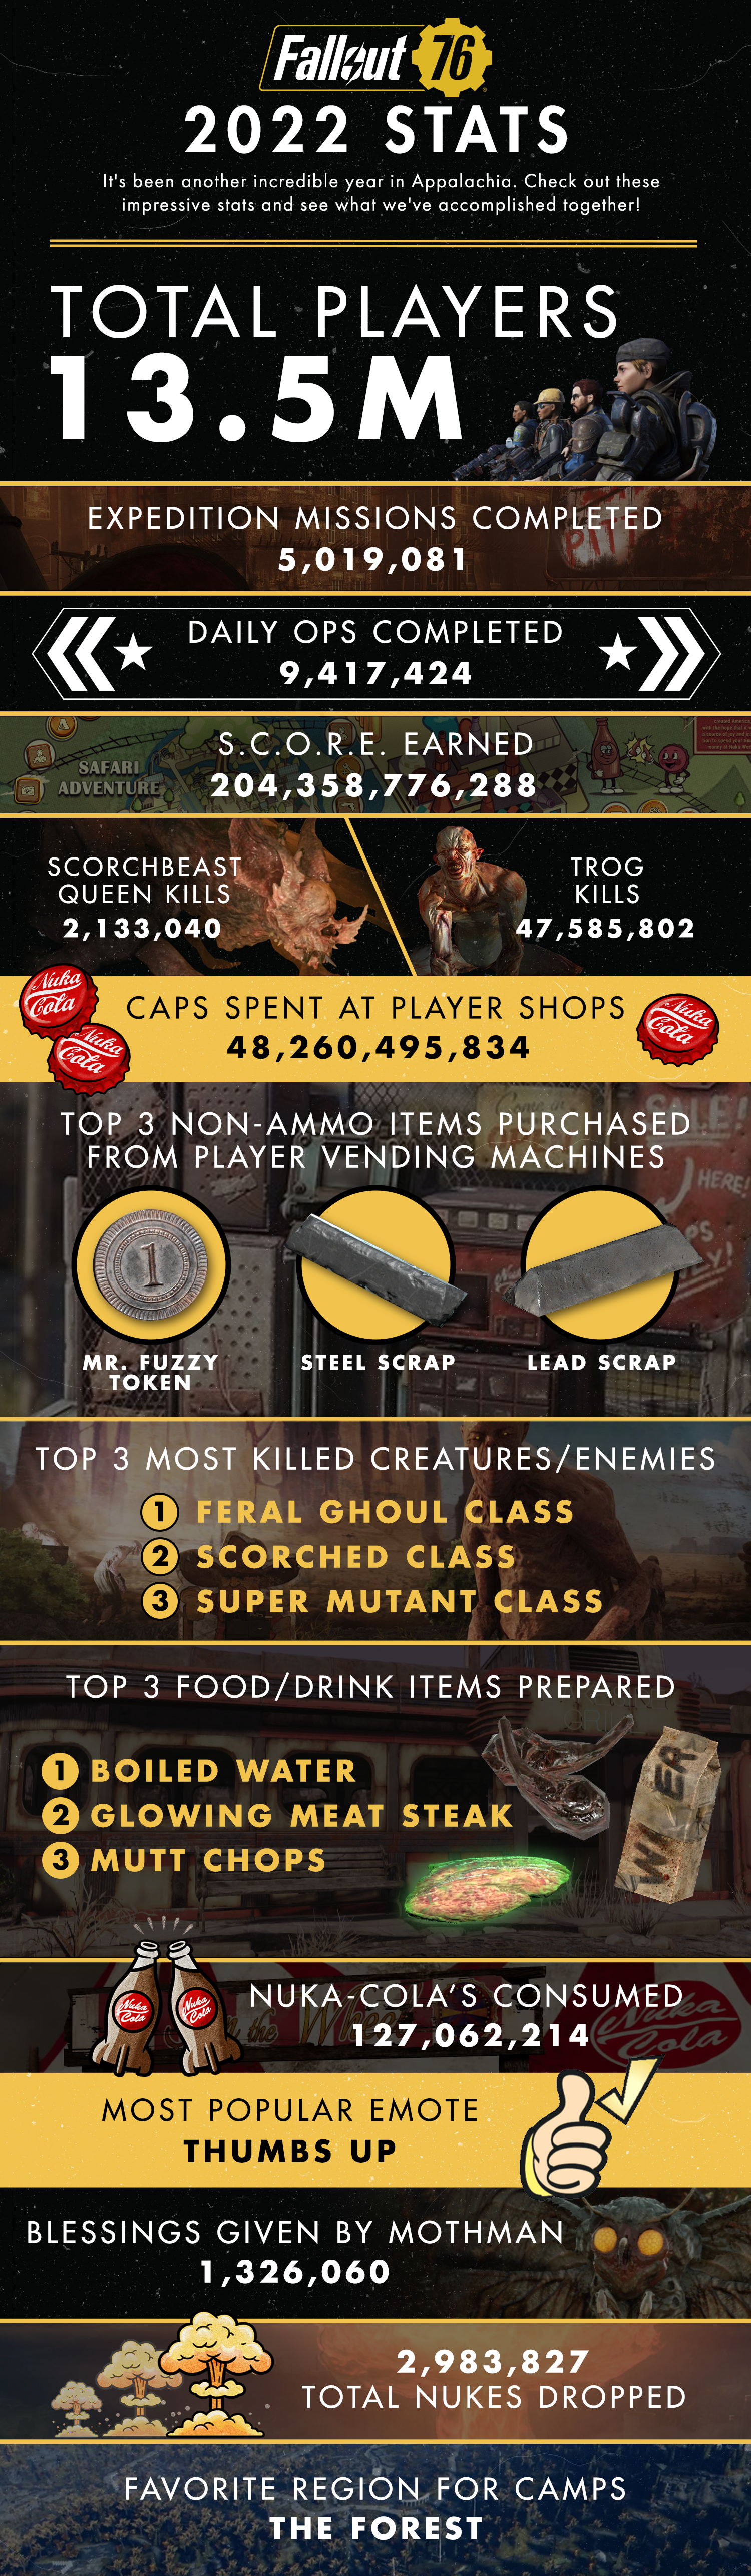 FO76 Infographic2022 EN 03 | Fallout 76 | Fallout 76 มียอดผู้เล่นรวมกว่า 13.5 ล้านคนทั่วโลกหลังวางจำหน่ายมา 4 ปี